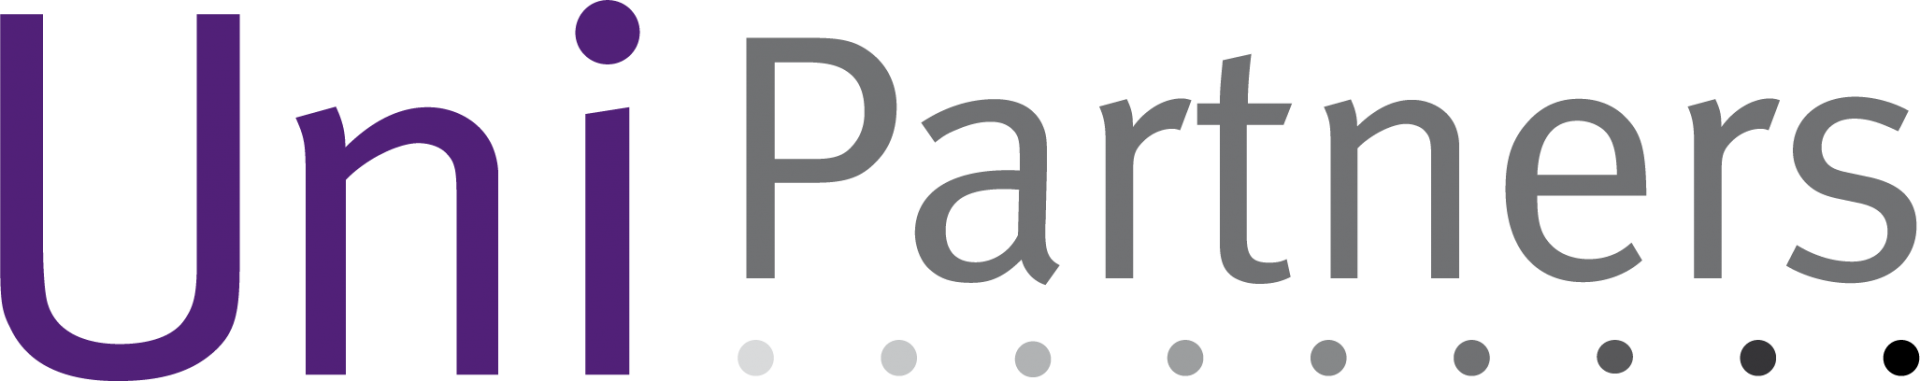 UniPartners-Logo.png